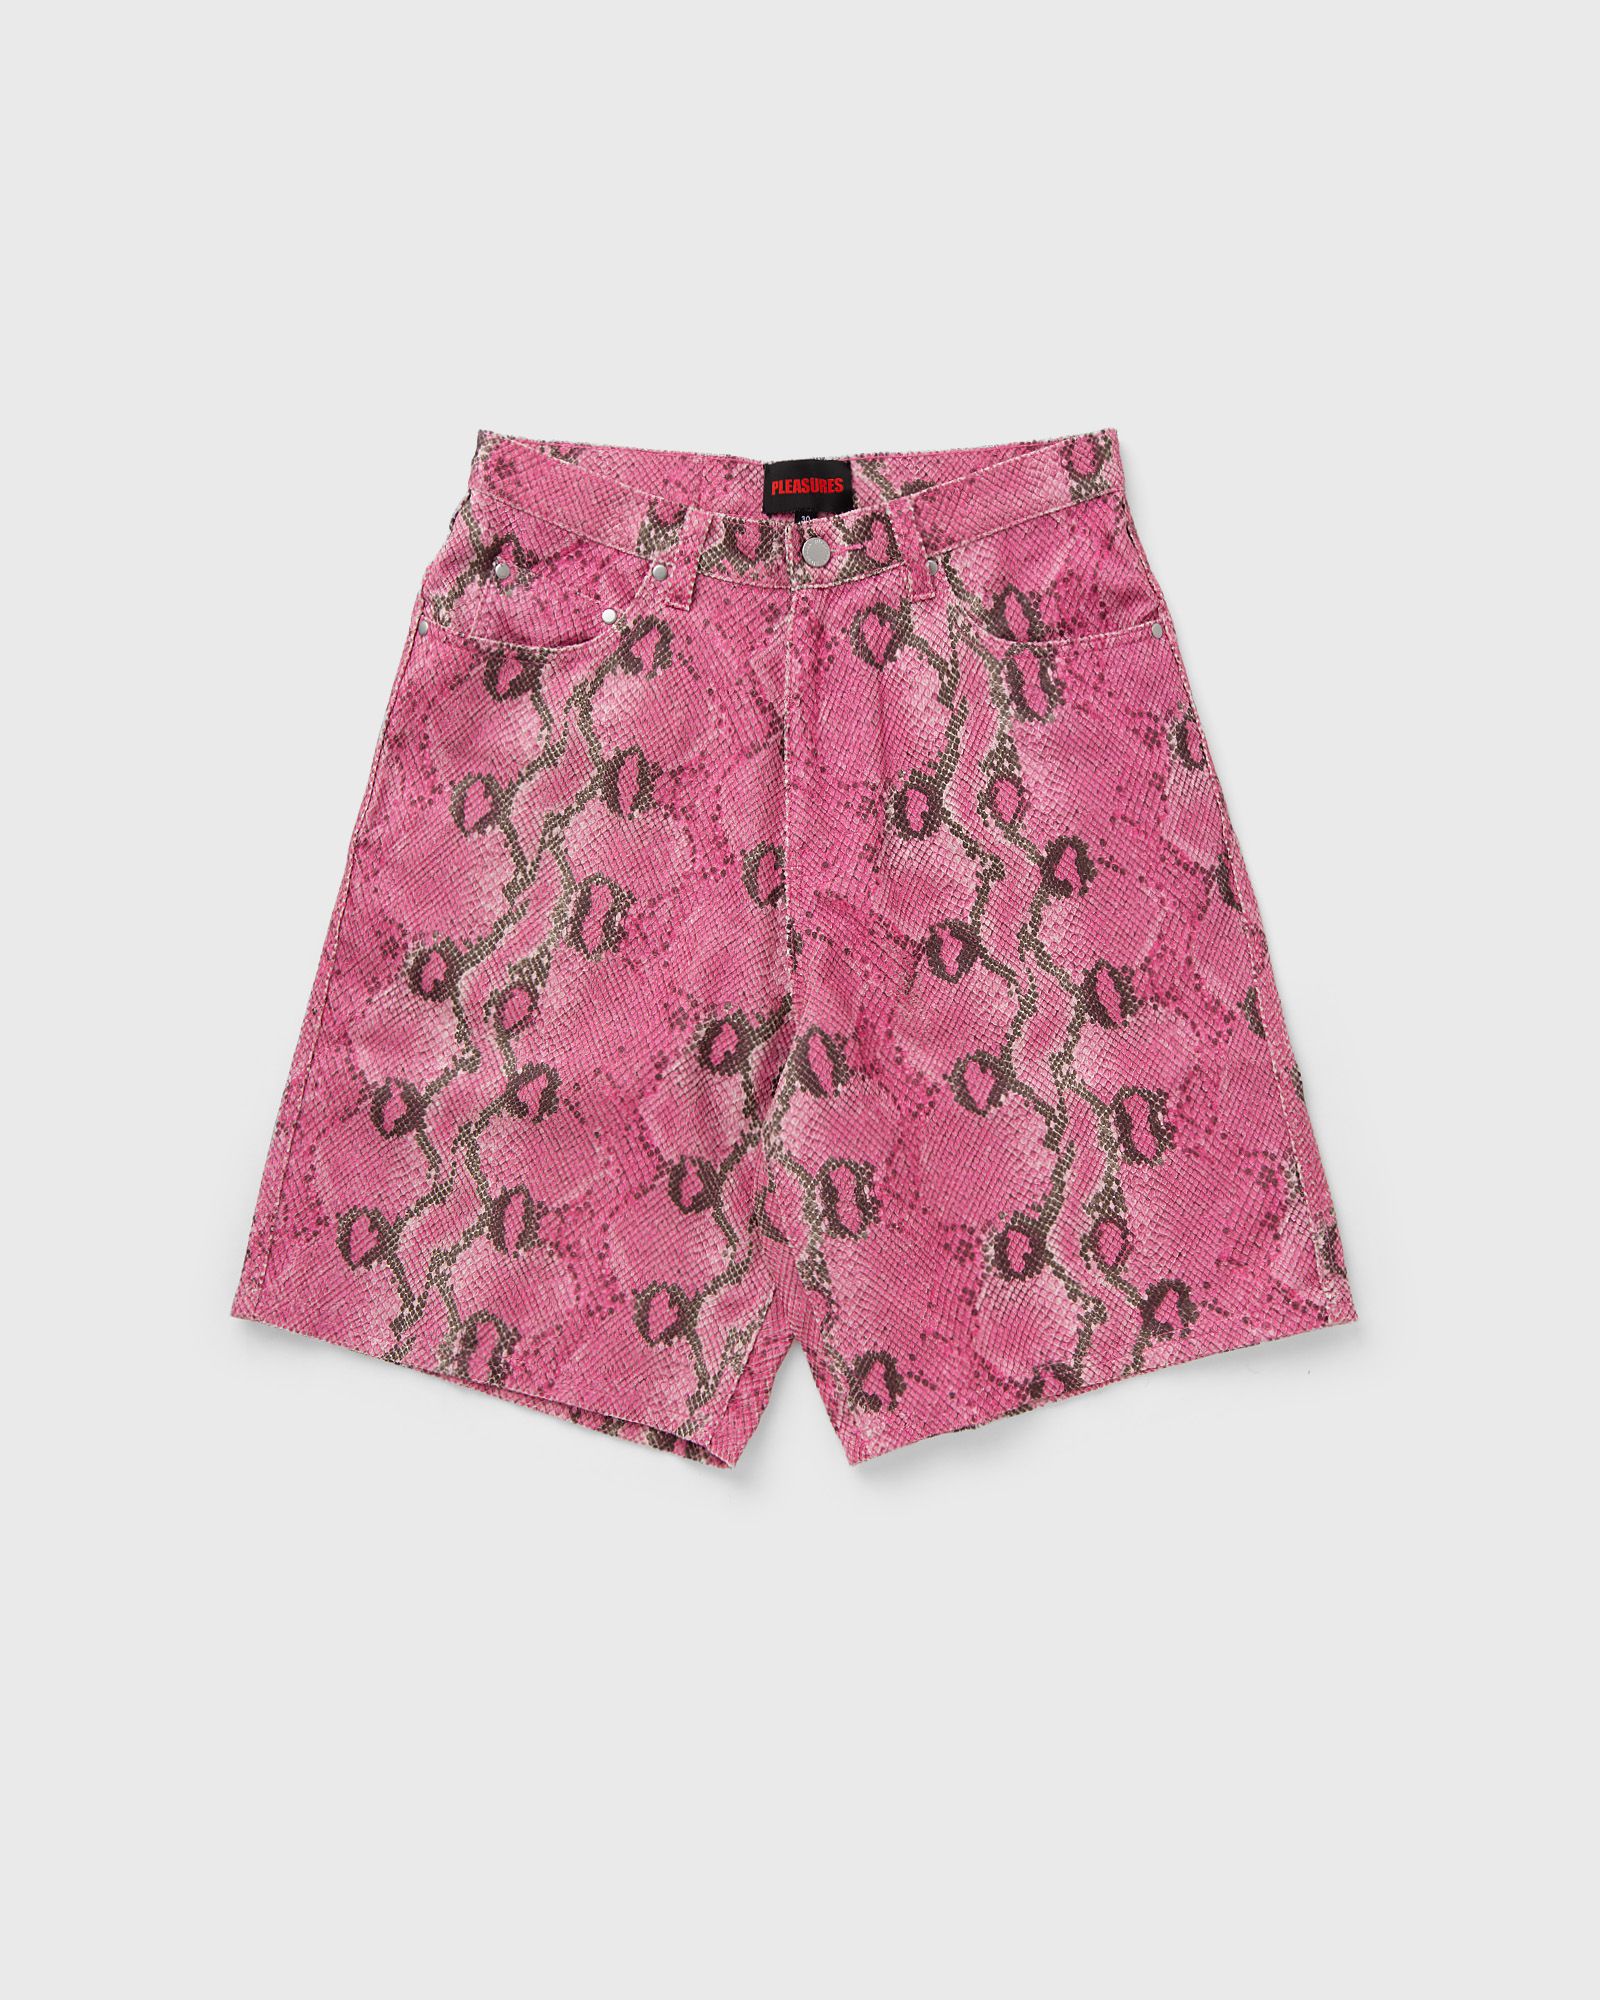 Pleasures - rattle shorts men casual shorts pink in größe:xxl